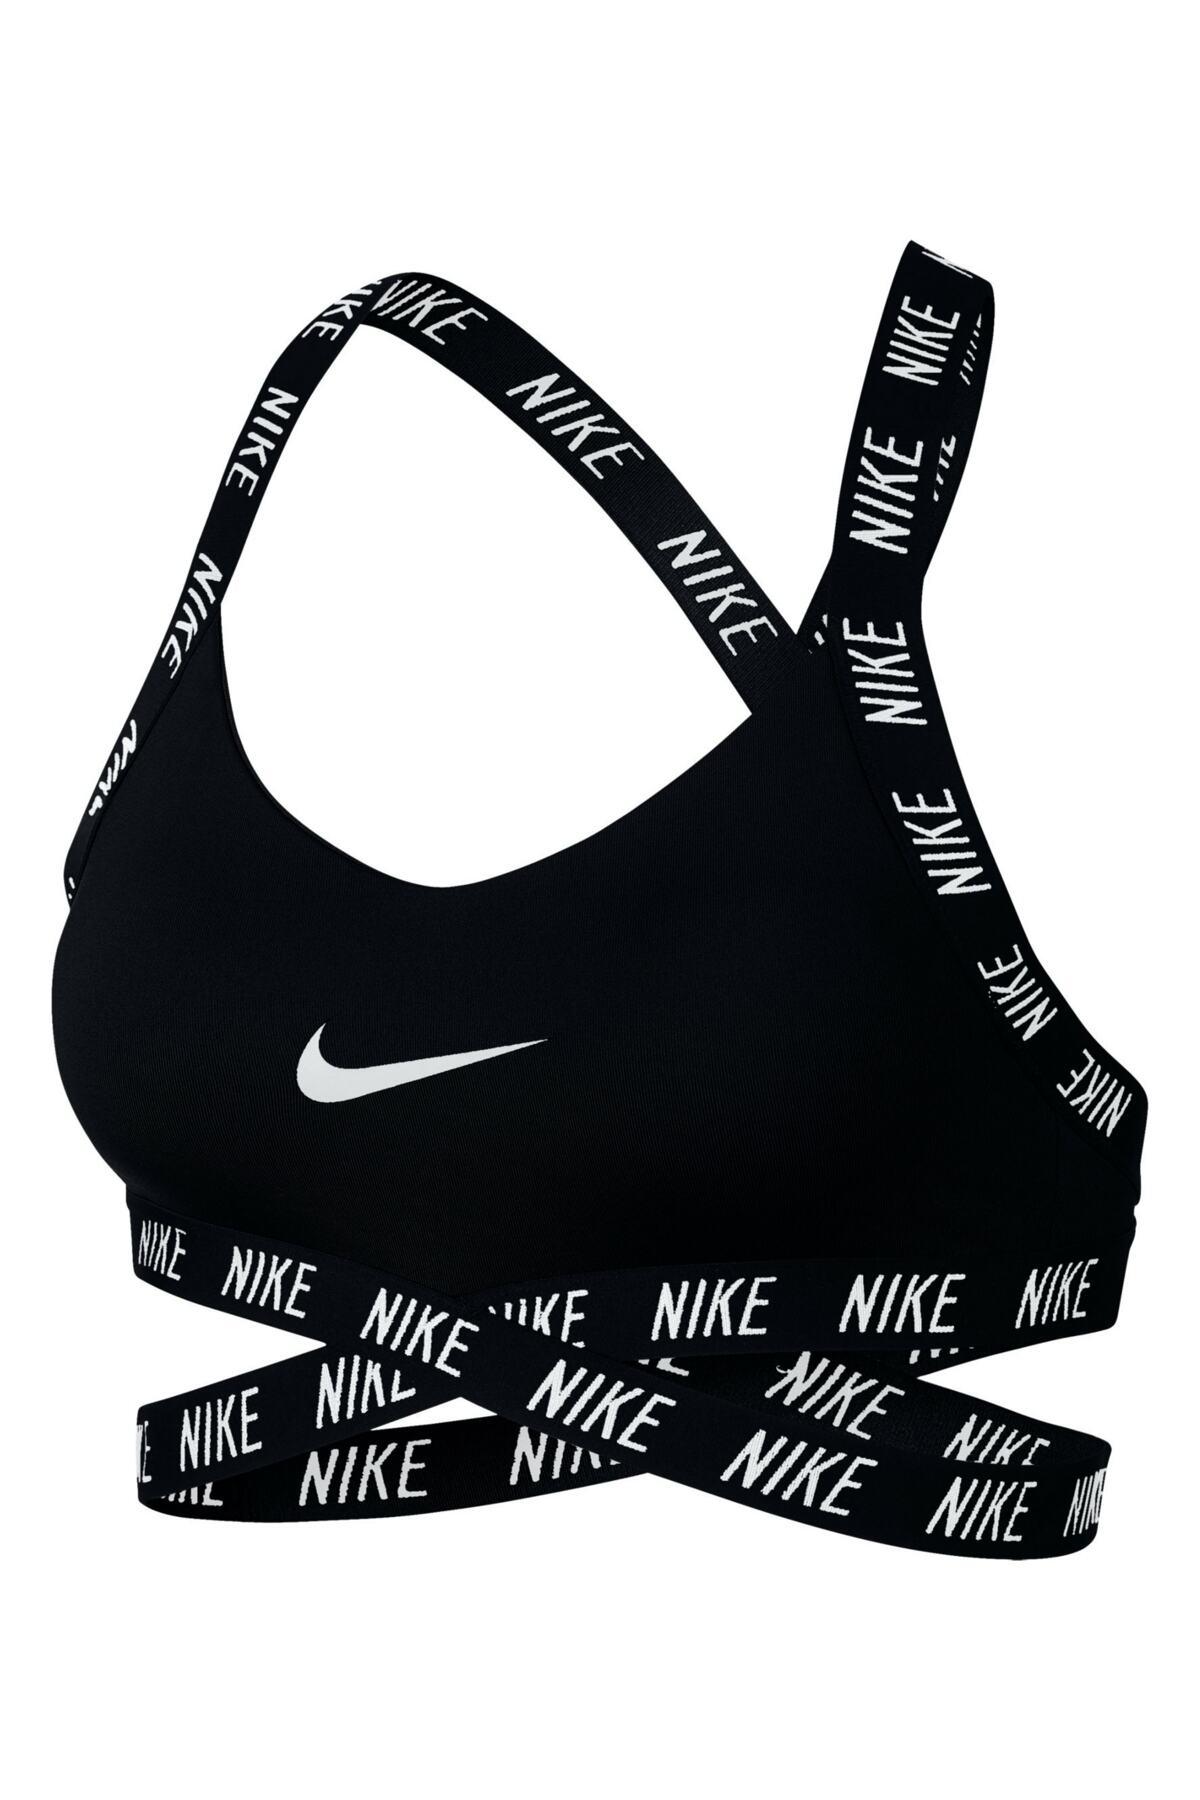 Nike Synthetic Dri-fit Indy Logo Sports Bra in Black/Black/White (Black ...